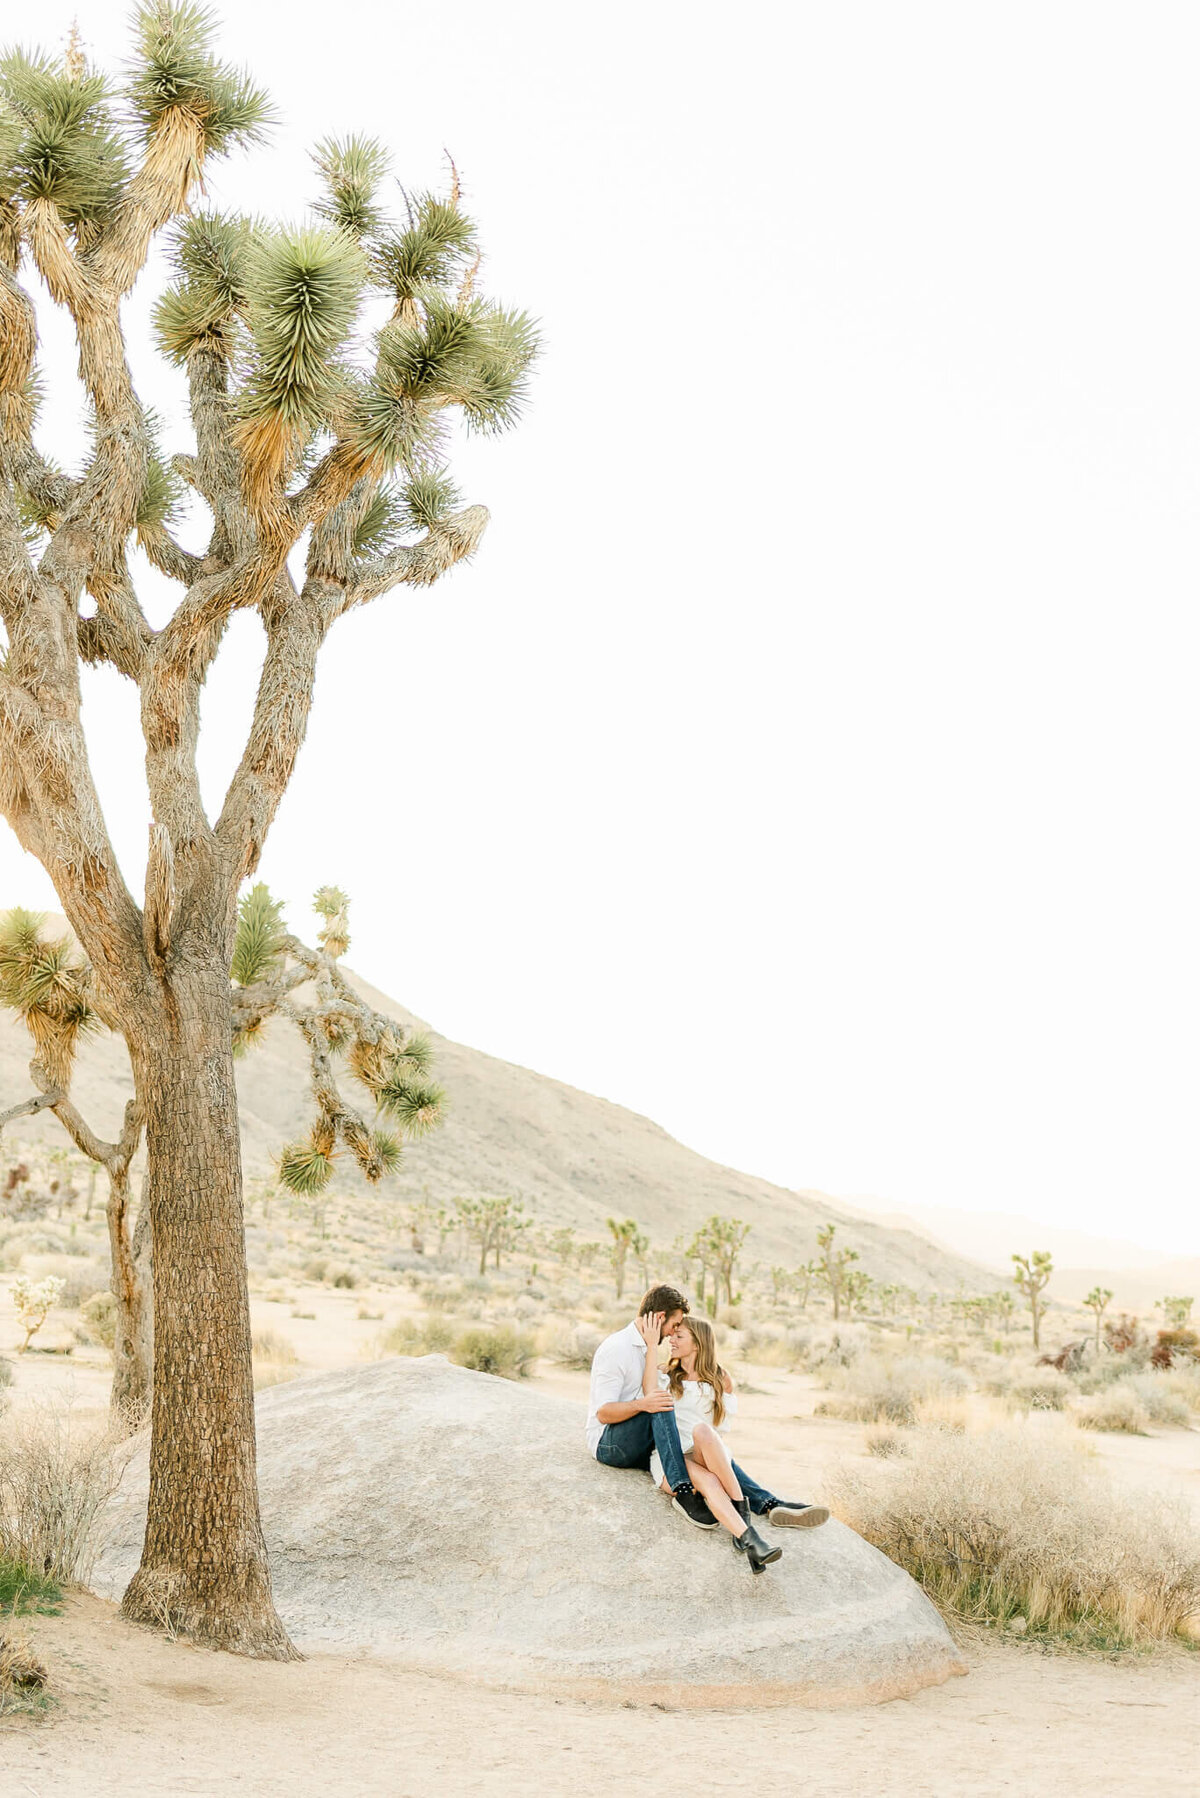 joshua-tree-national-park-elopement-weddings-engagement-photographers-southern-california-palm-springs-adventure-destination-1